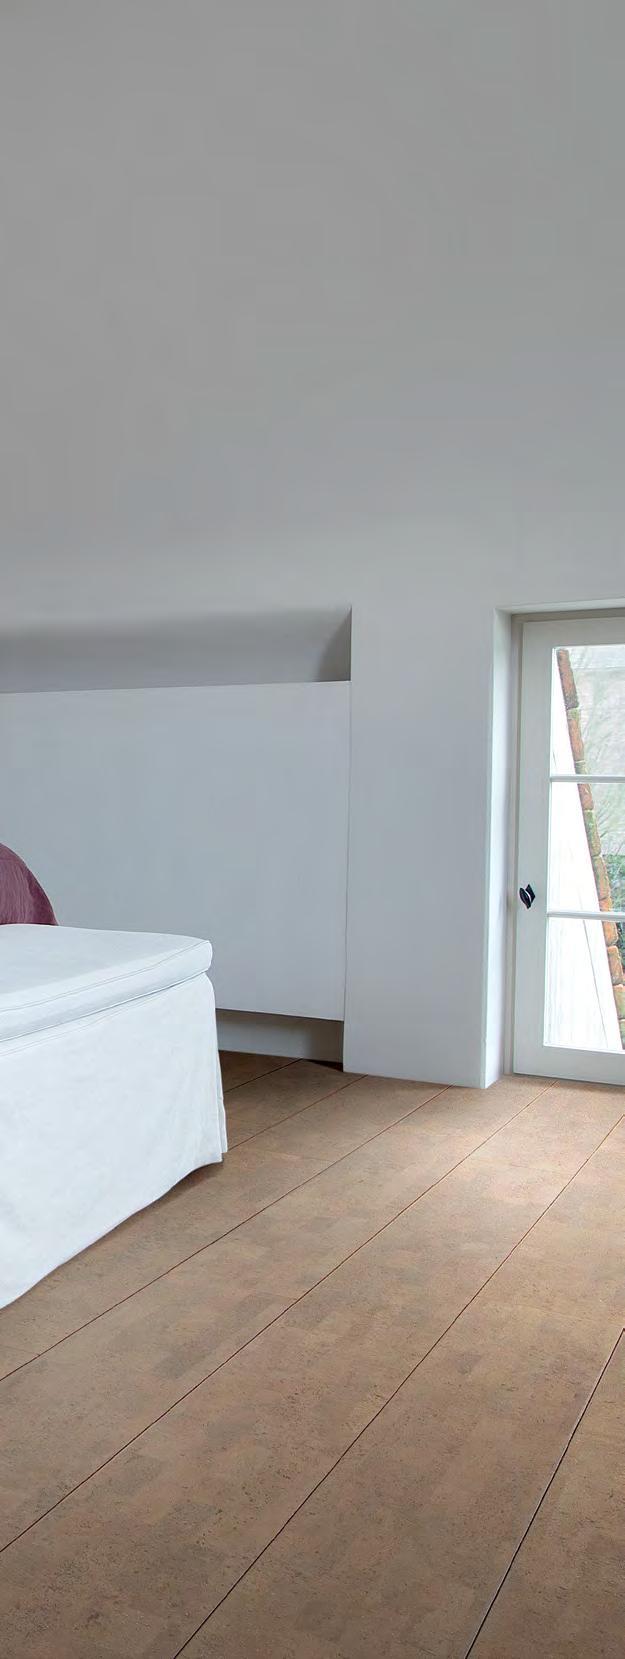 MERIDA LAMEL GRIJSBRUIN zwevend legklaar 1200x210x11mm slaapkamer.